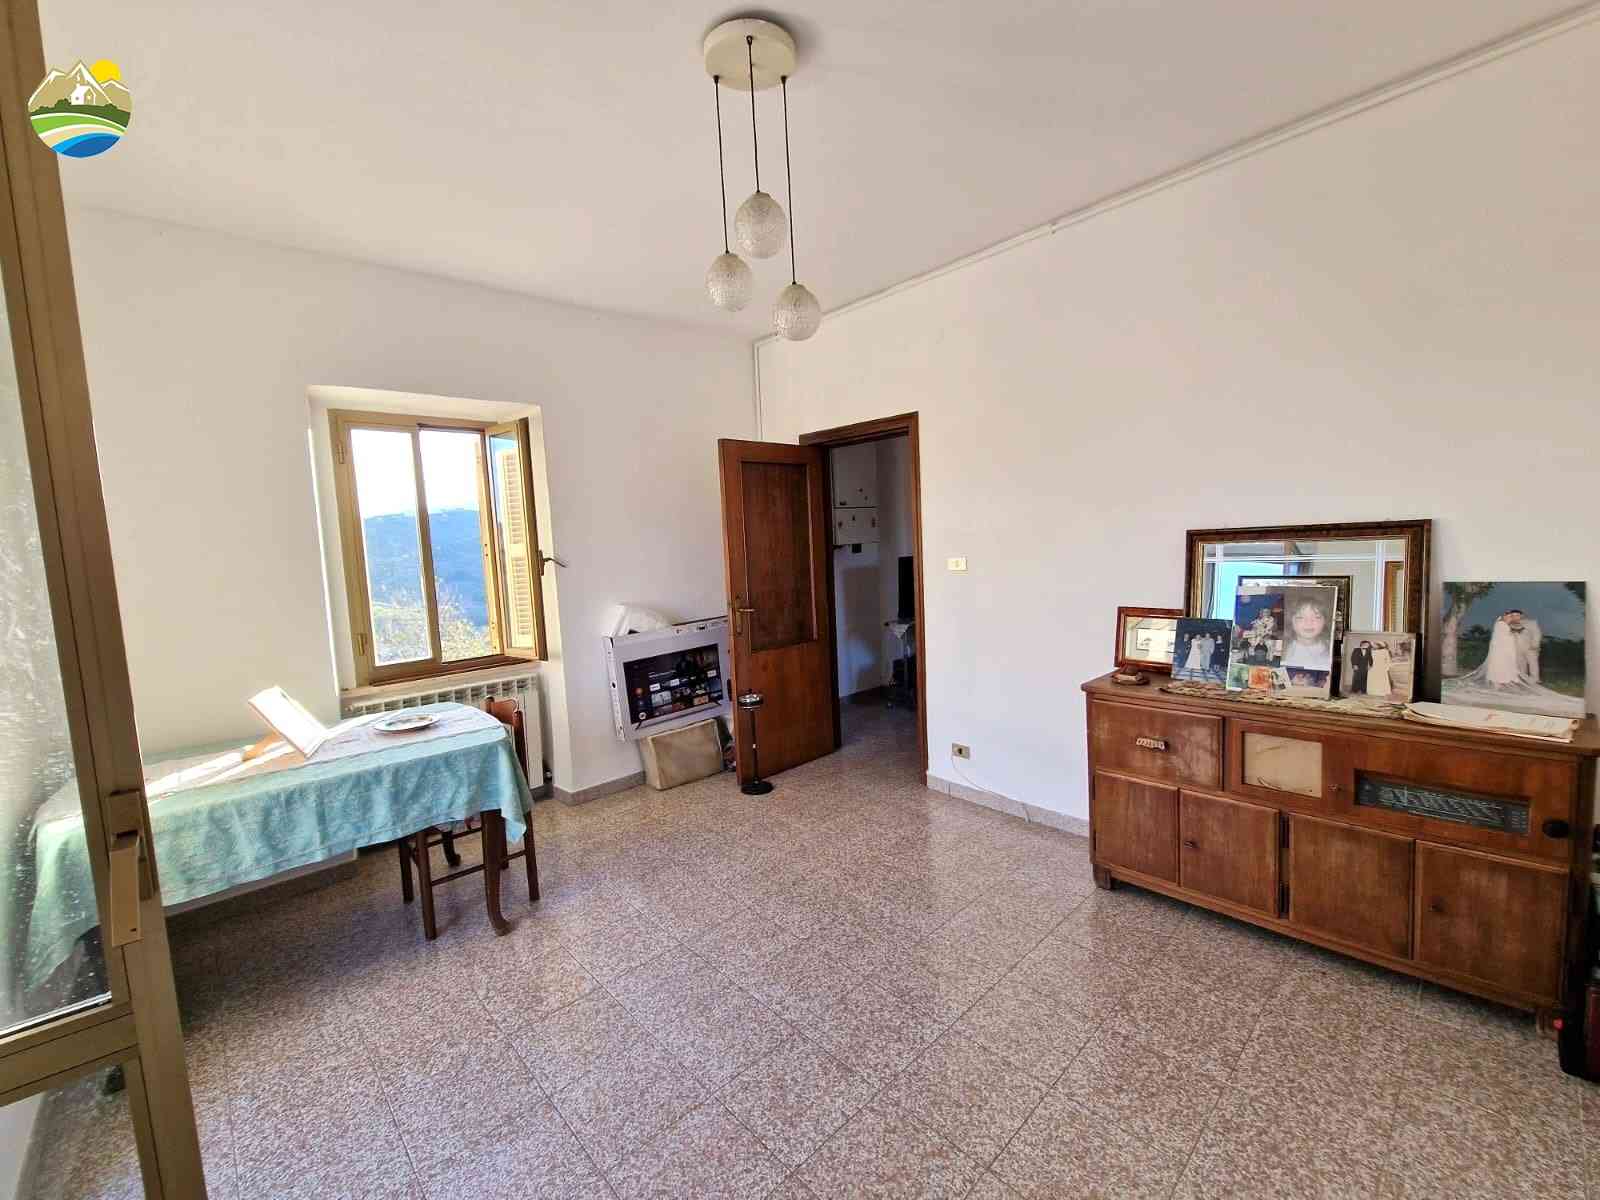 Country Houses Country Houses for sale Cellino Attanasio (TE), Tenuta Vallerossa - Cellino Attanasio - EUR 265.980 660 small